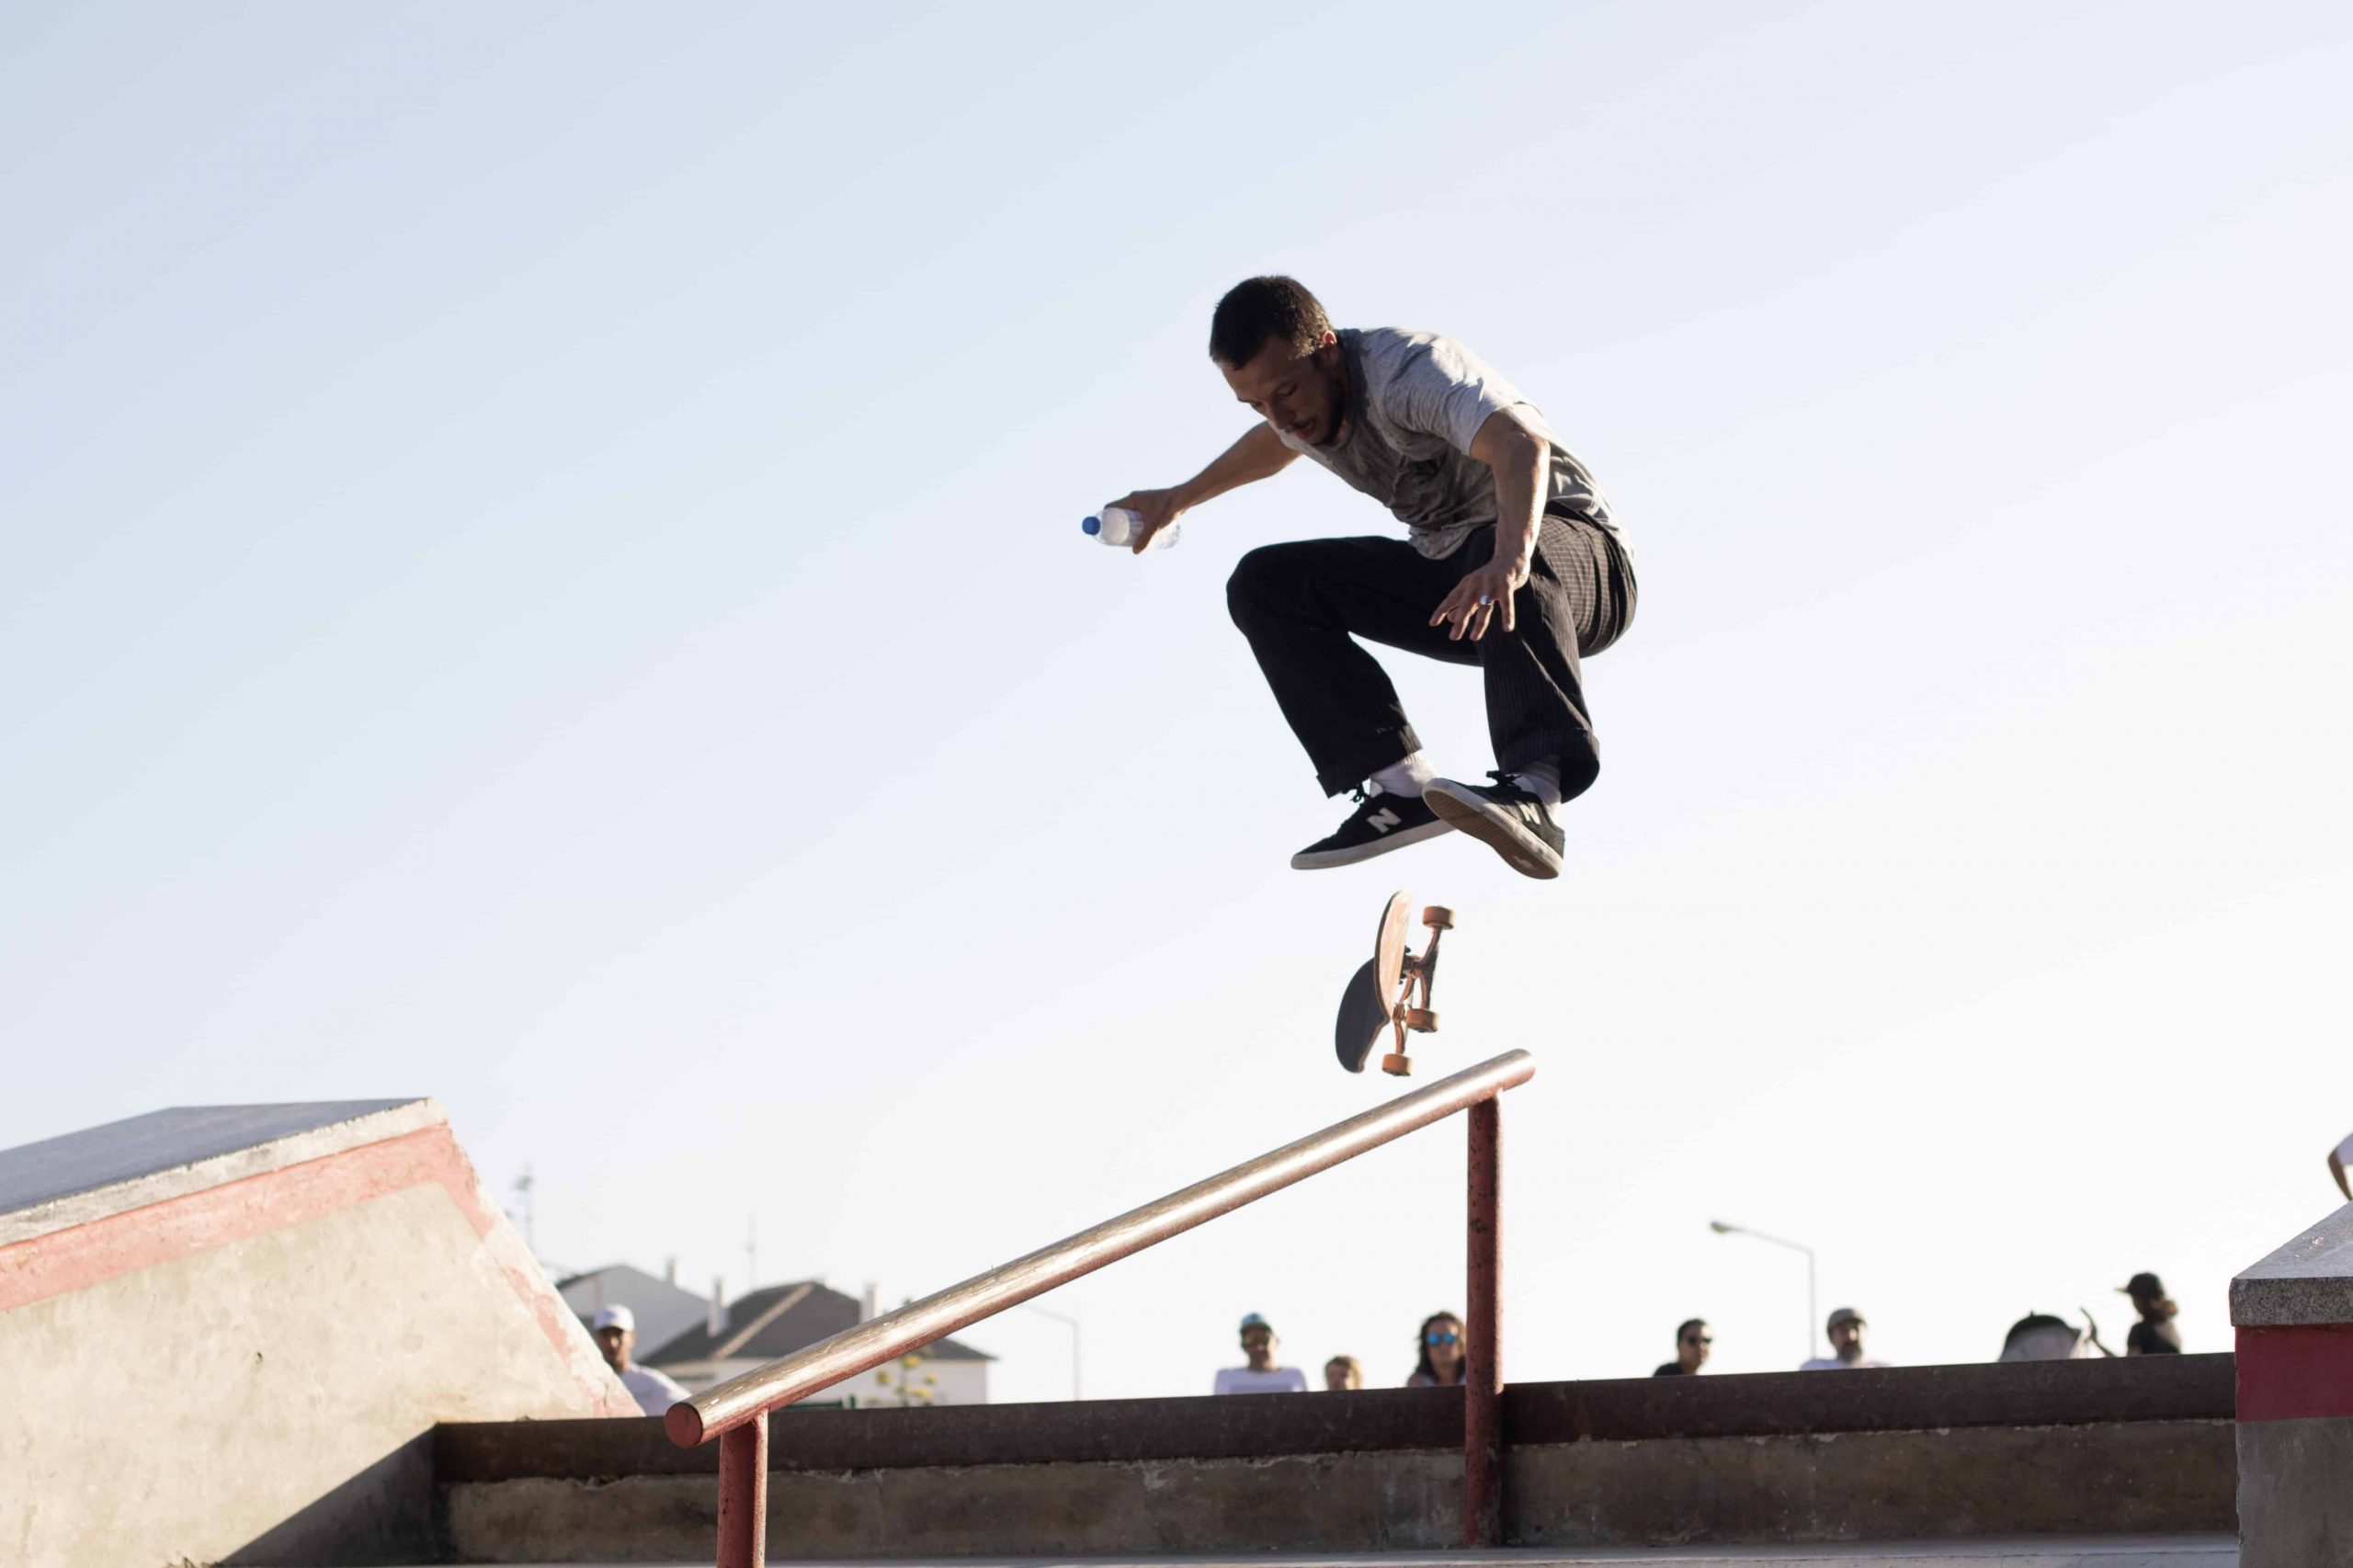 man wearing white t shirt performing skateboard tricks on rail under blue sky stockpack pexels scaled